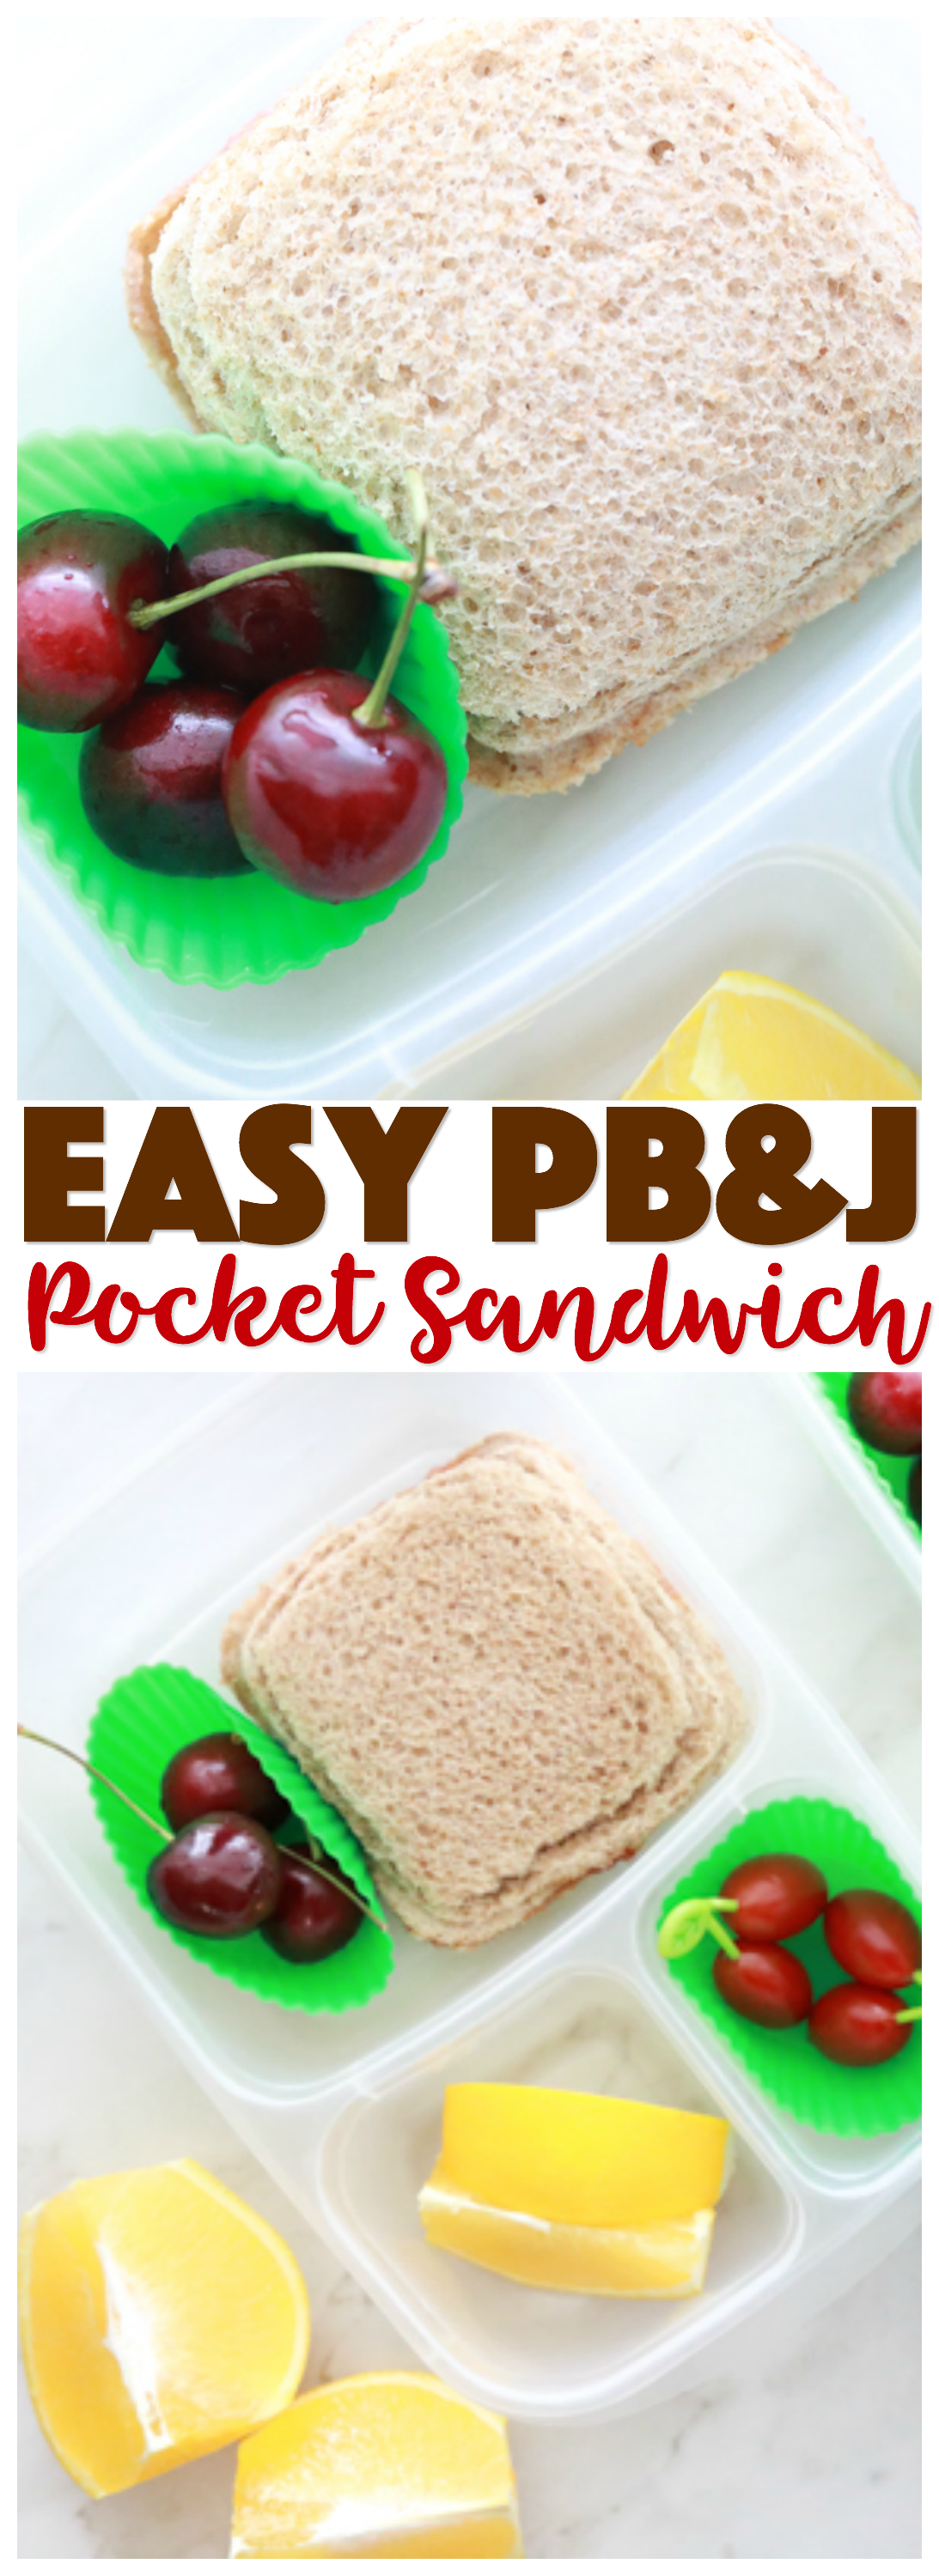 Help them power through their day with a super Easy PB&J Pocket Sandwich on wheat bread.